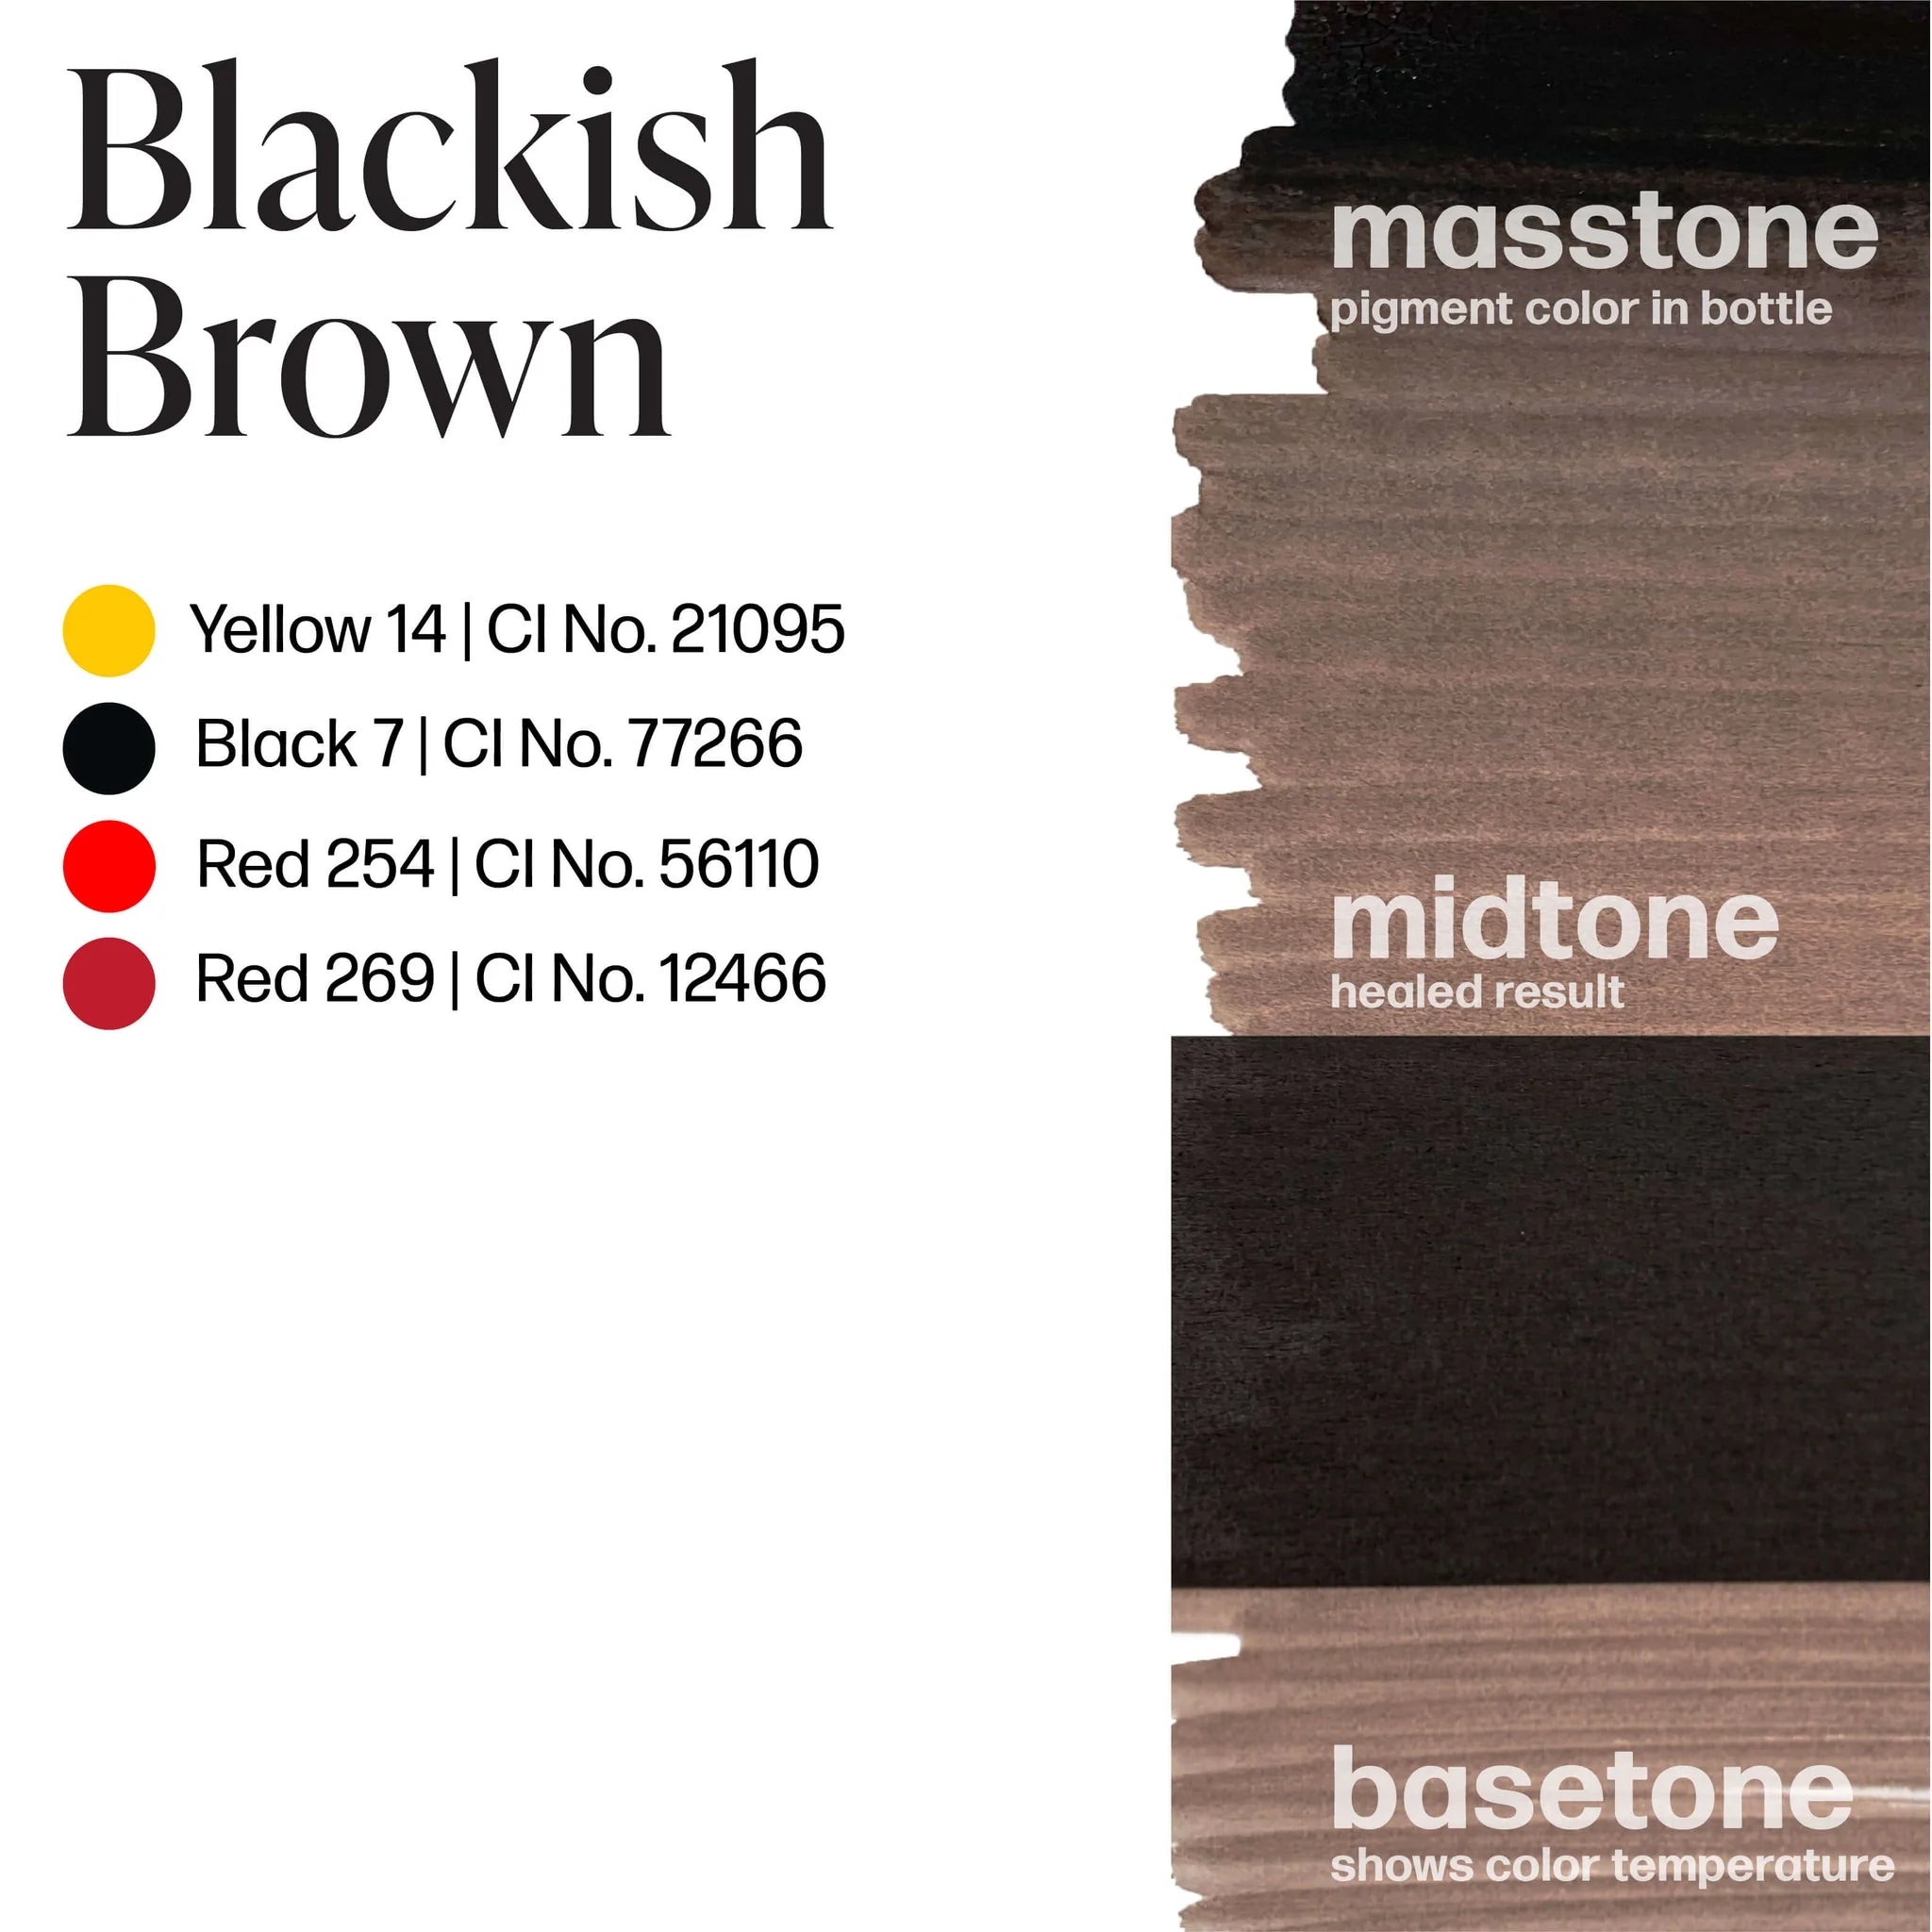 Perma Blend - Blackish Brown